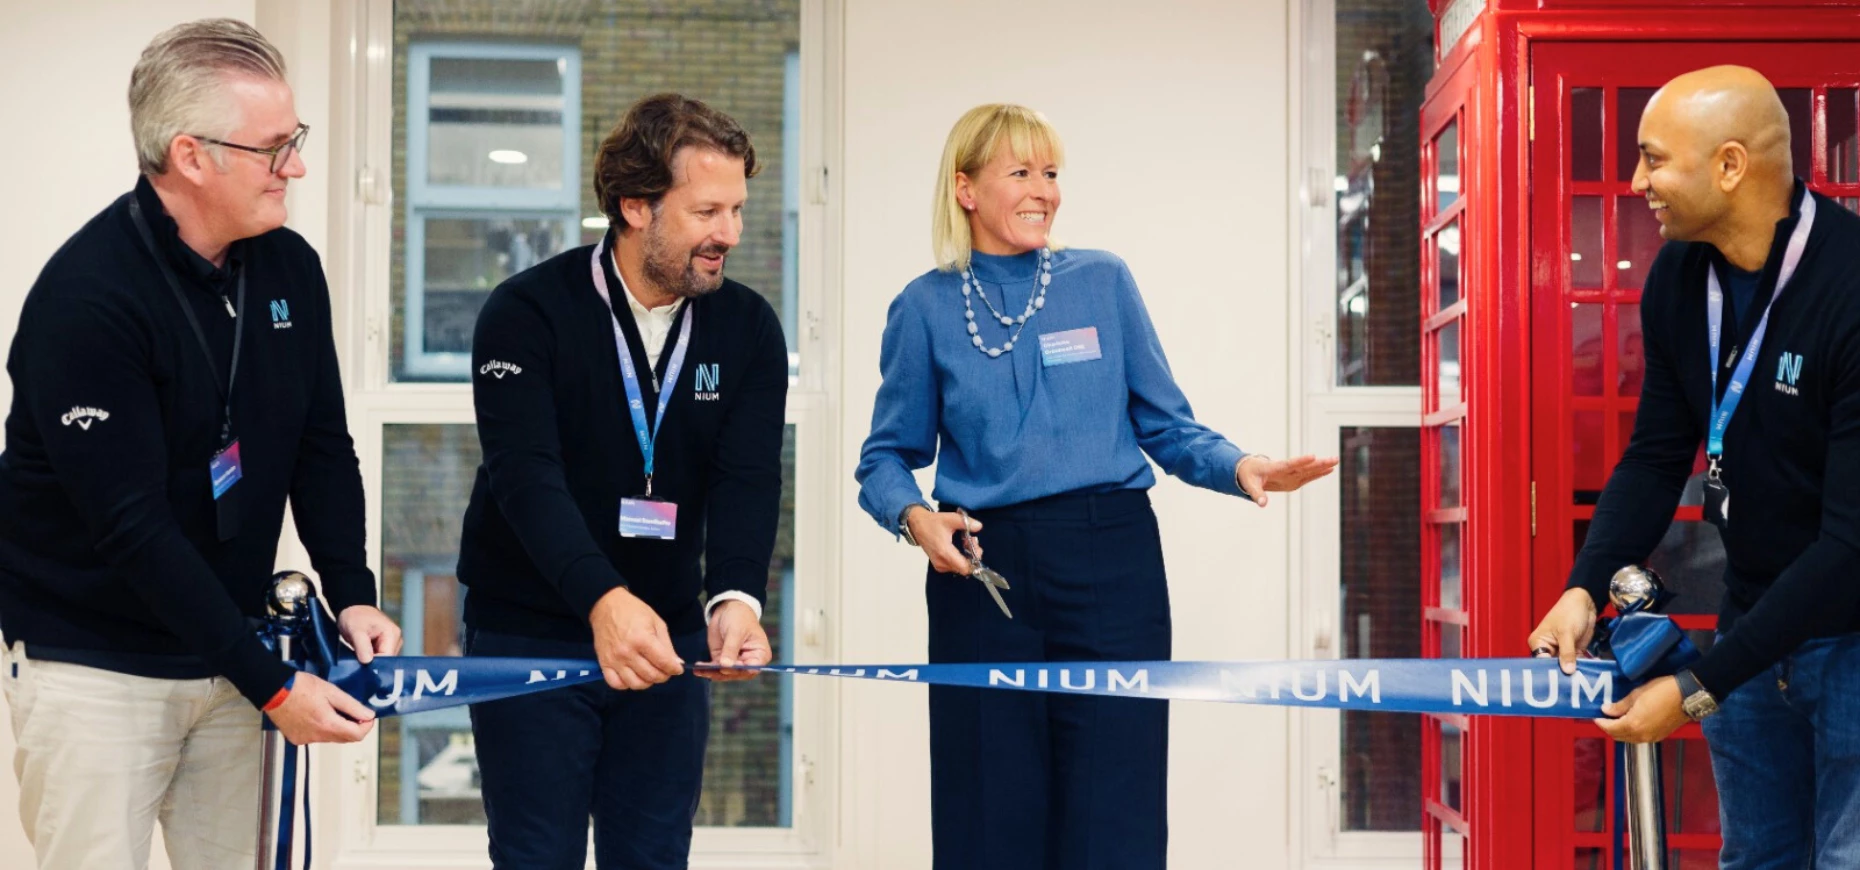 Charlotte Crosswell OBE opens Nium UK office.